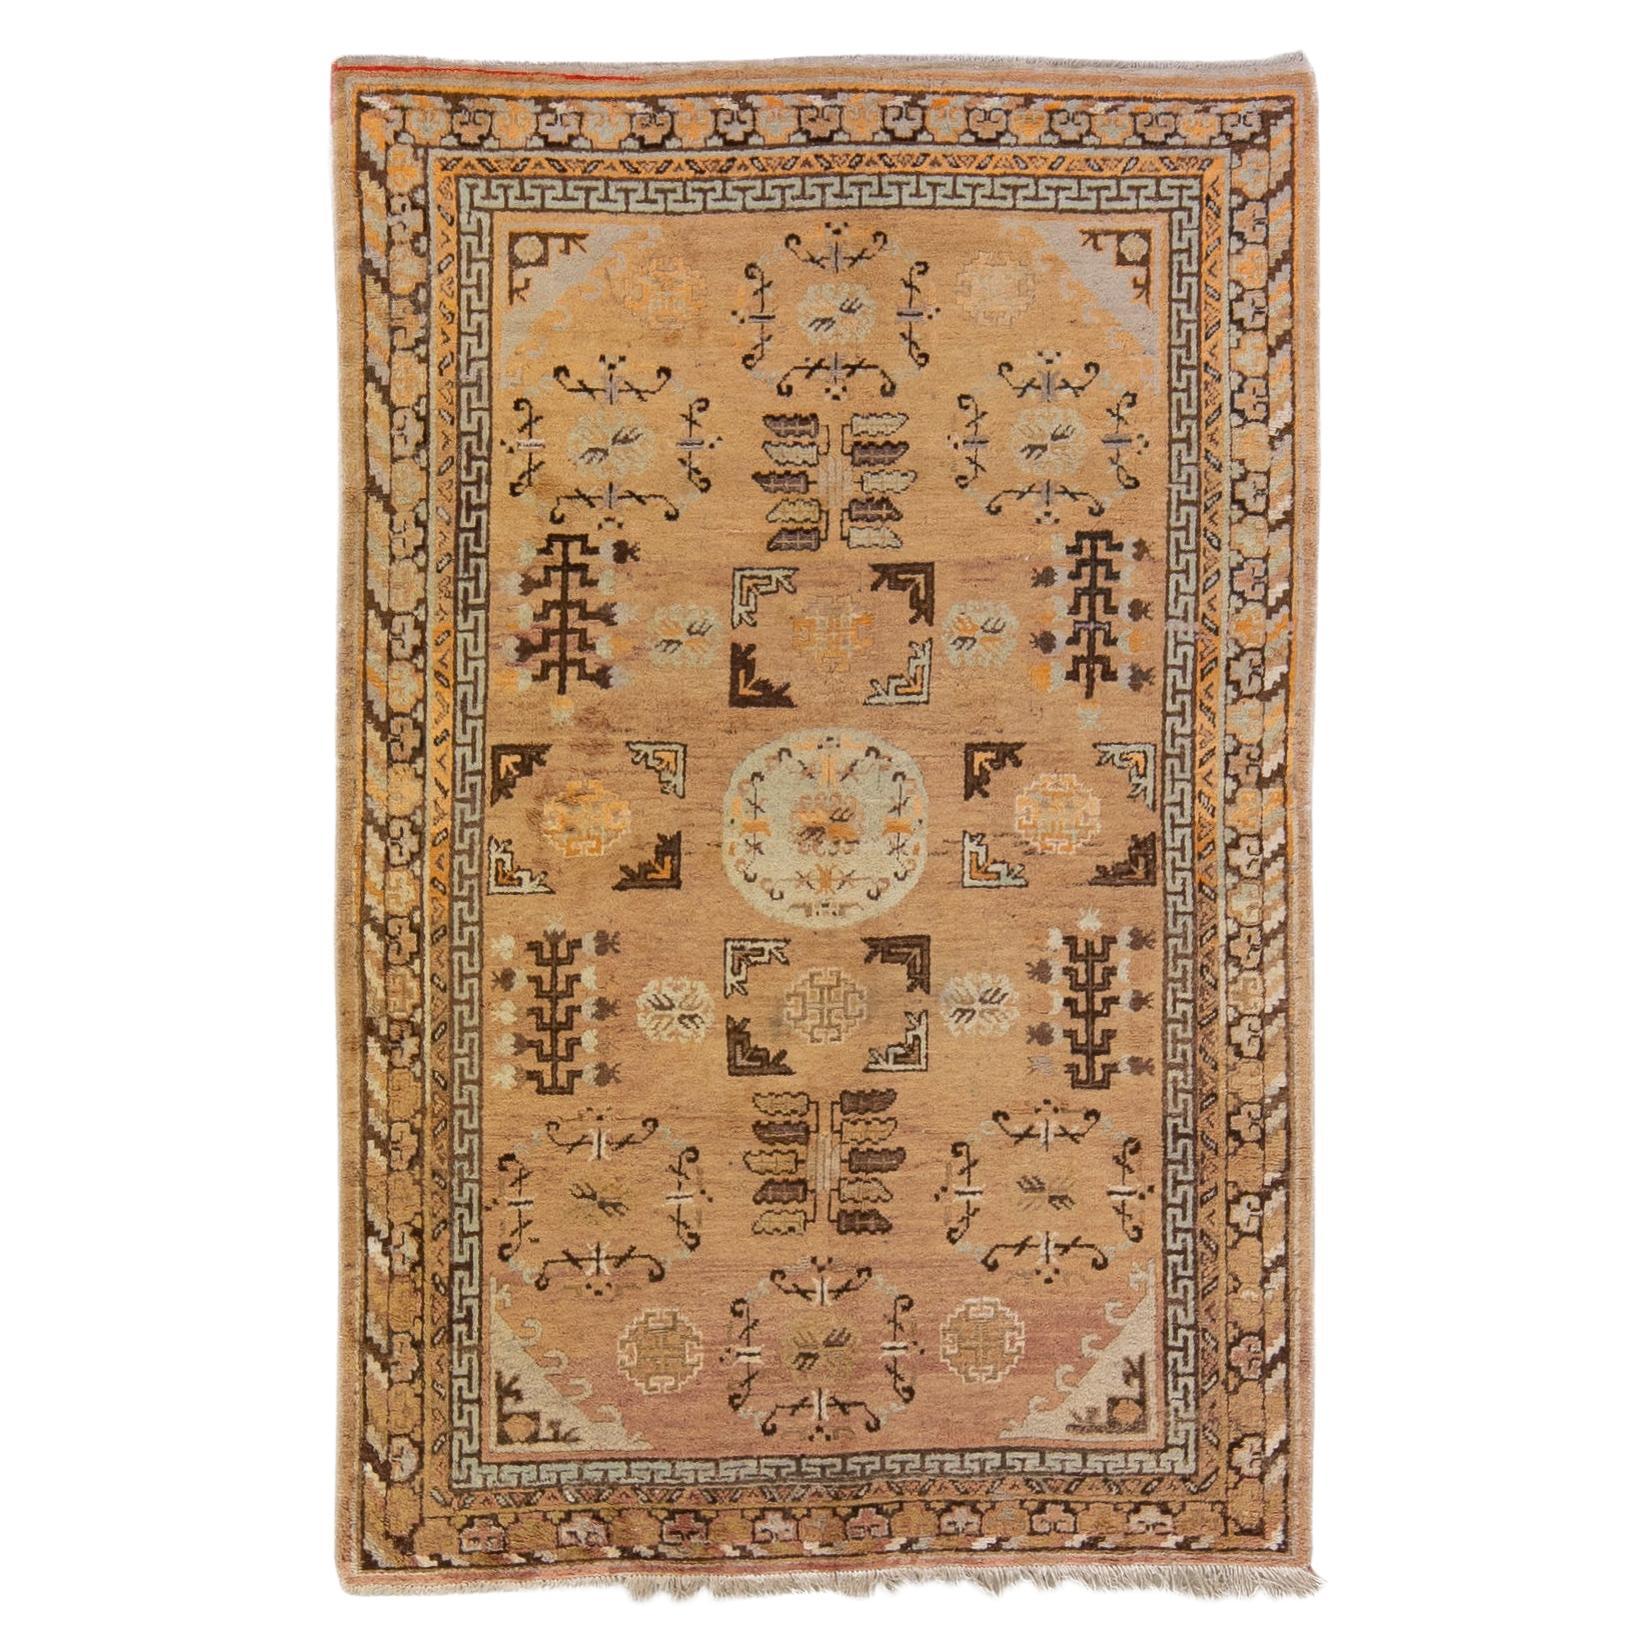 Antique Khotan Handmade Geometric Tan Wool Rug